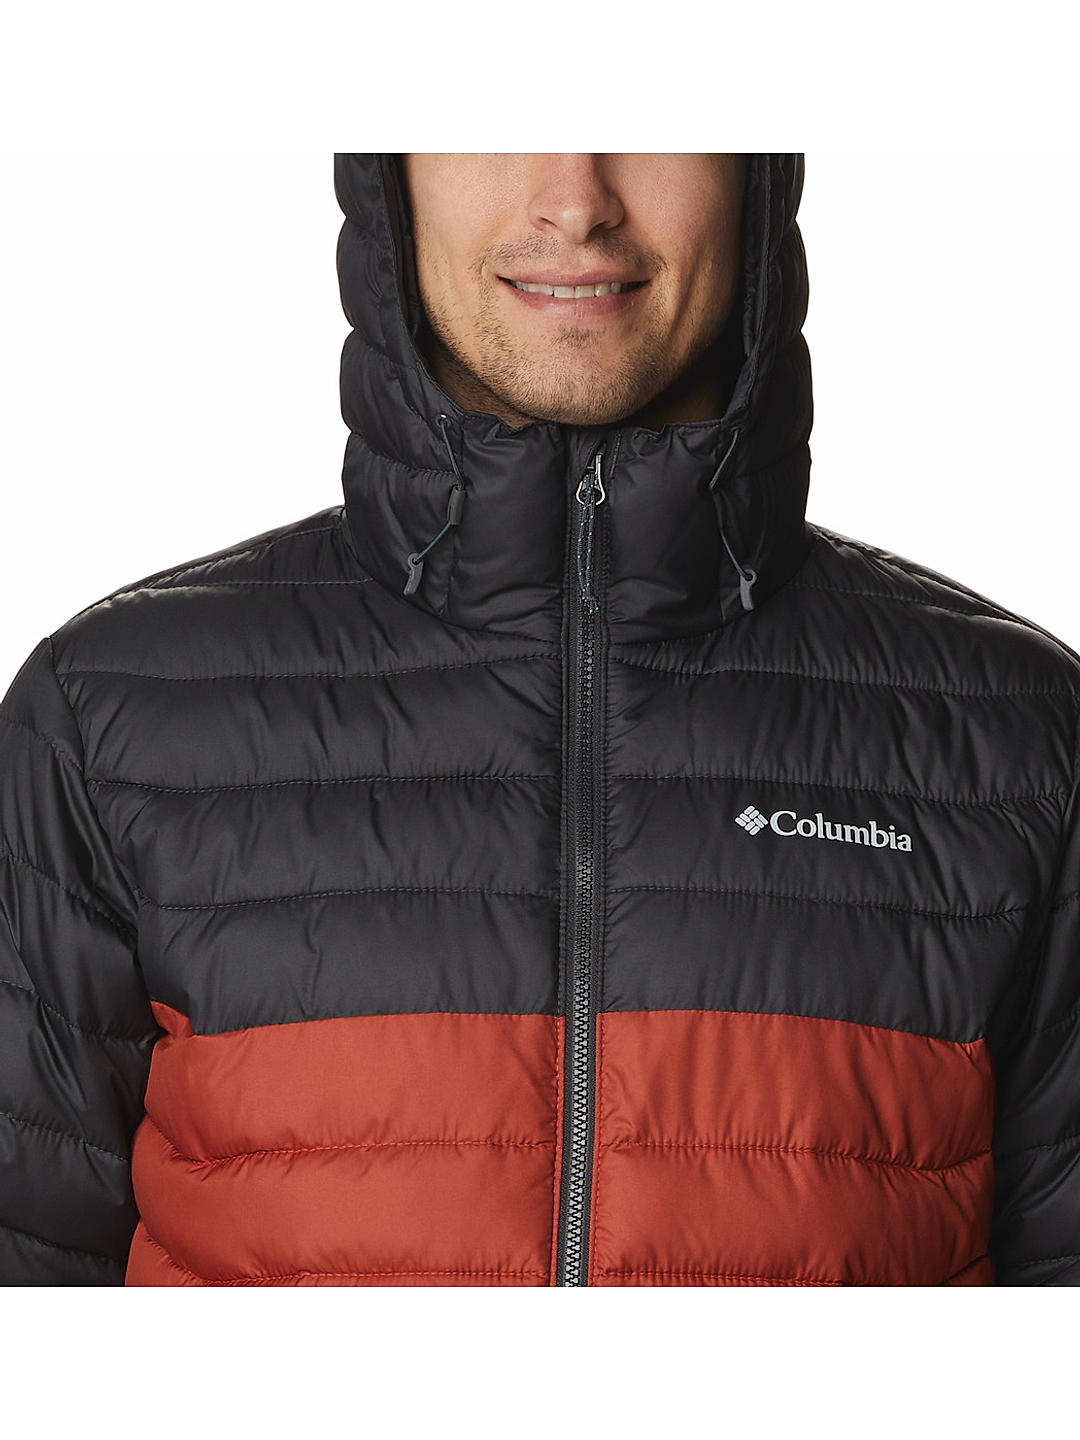 Buy Orange Powder Lite Hooded Jacket for Men Online at Columbia Sportswear